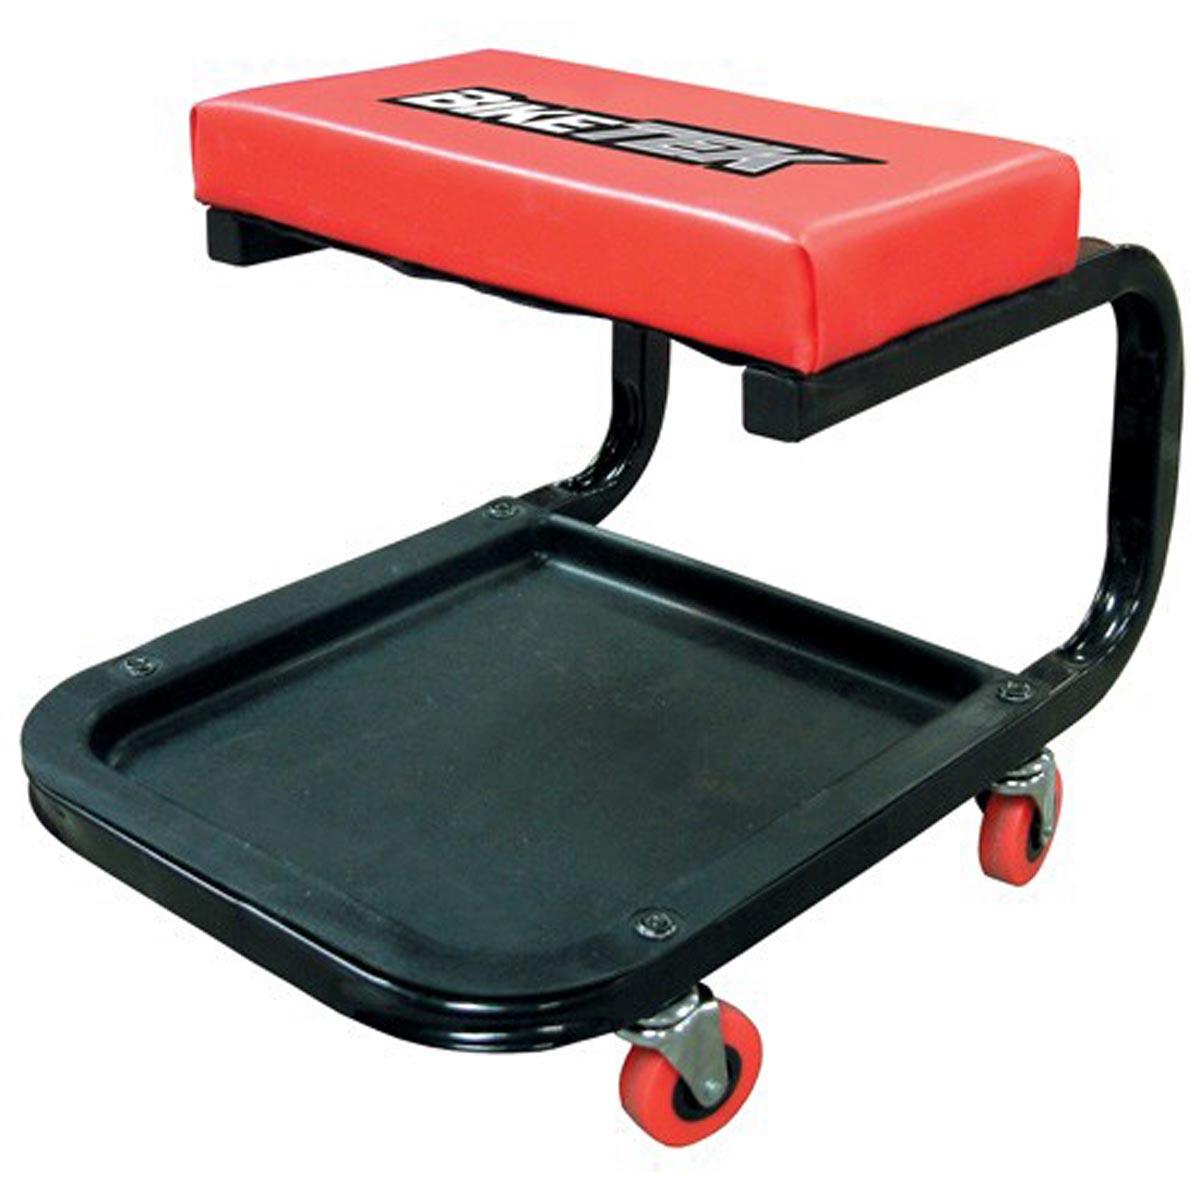 BikeTek Garage Creeper Seat - Red - Browse our range of Accessories: Travel - getgearedshop 